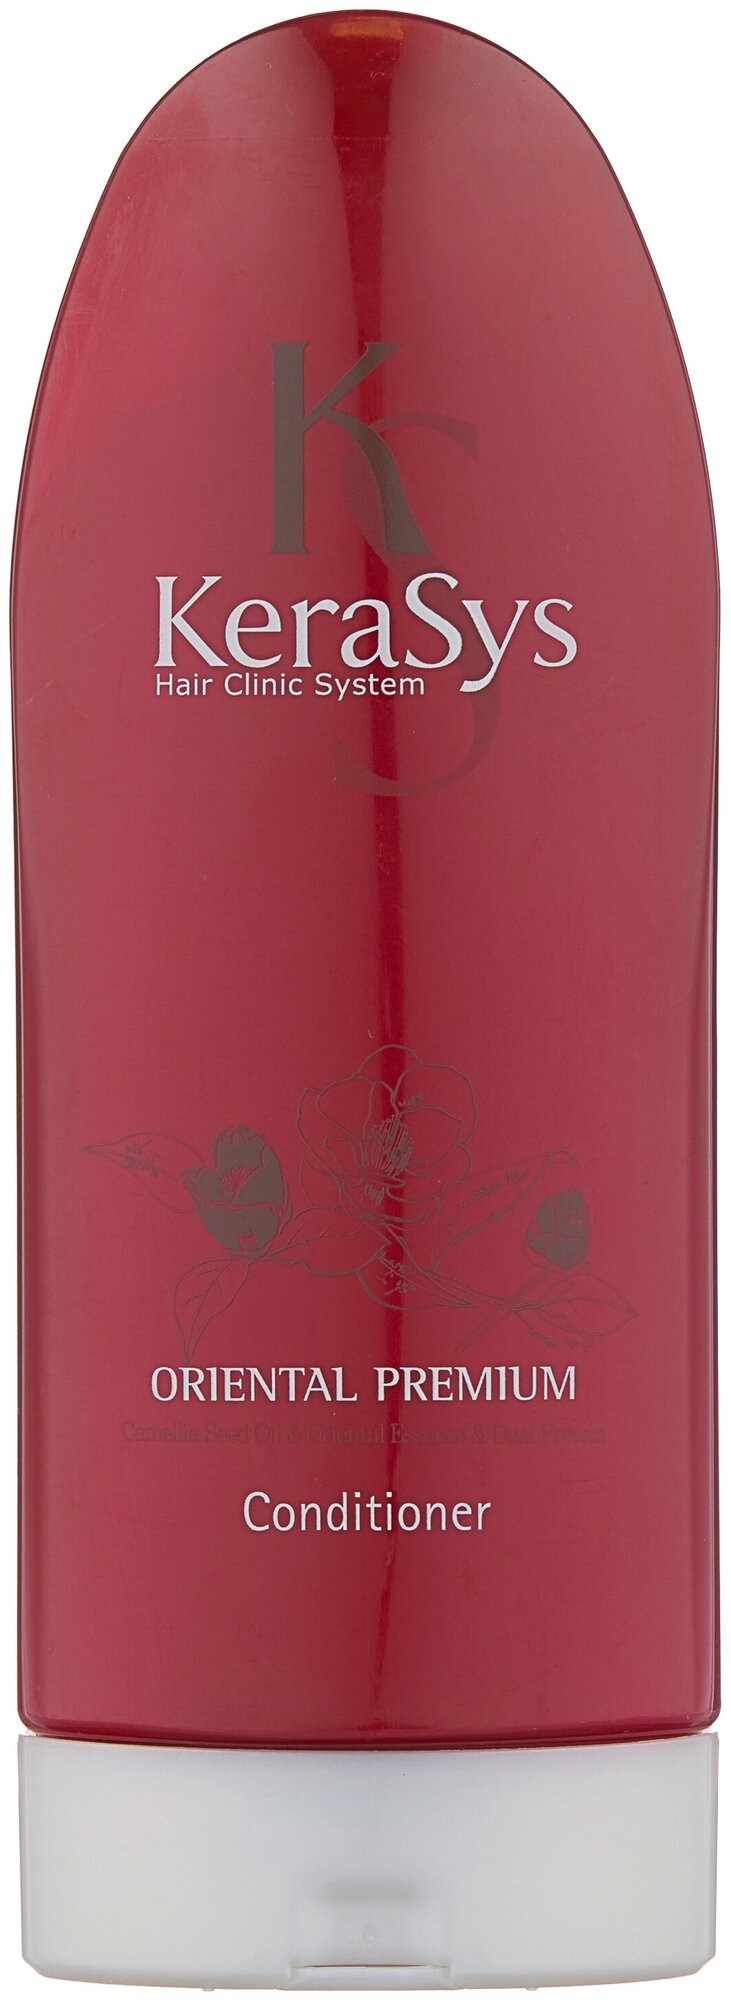 KeraSys кондиционер Oriental Premium для всех типов волос, 200 мл, 200 г